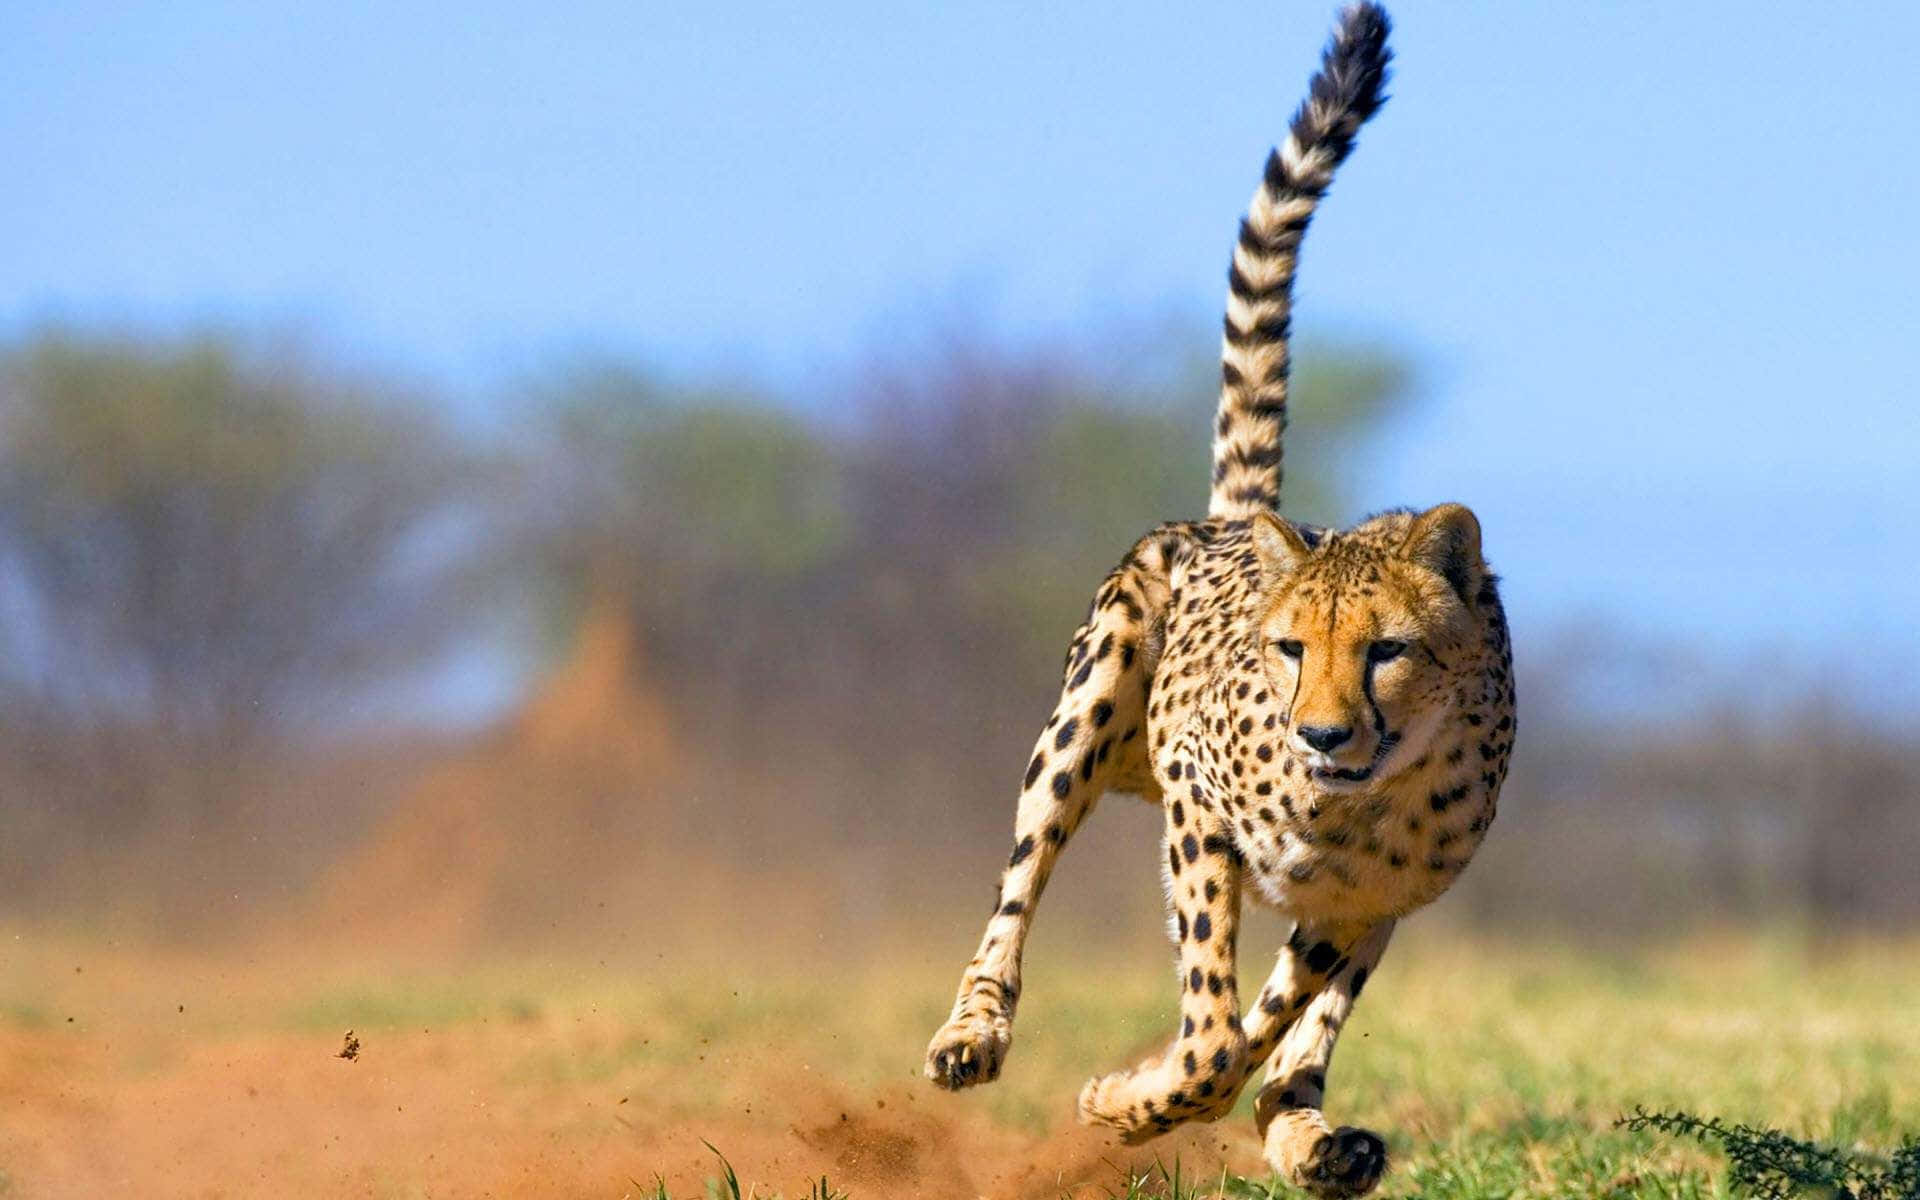 Close-up of a Cheetah prowling across the savannah